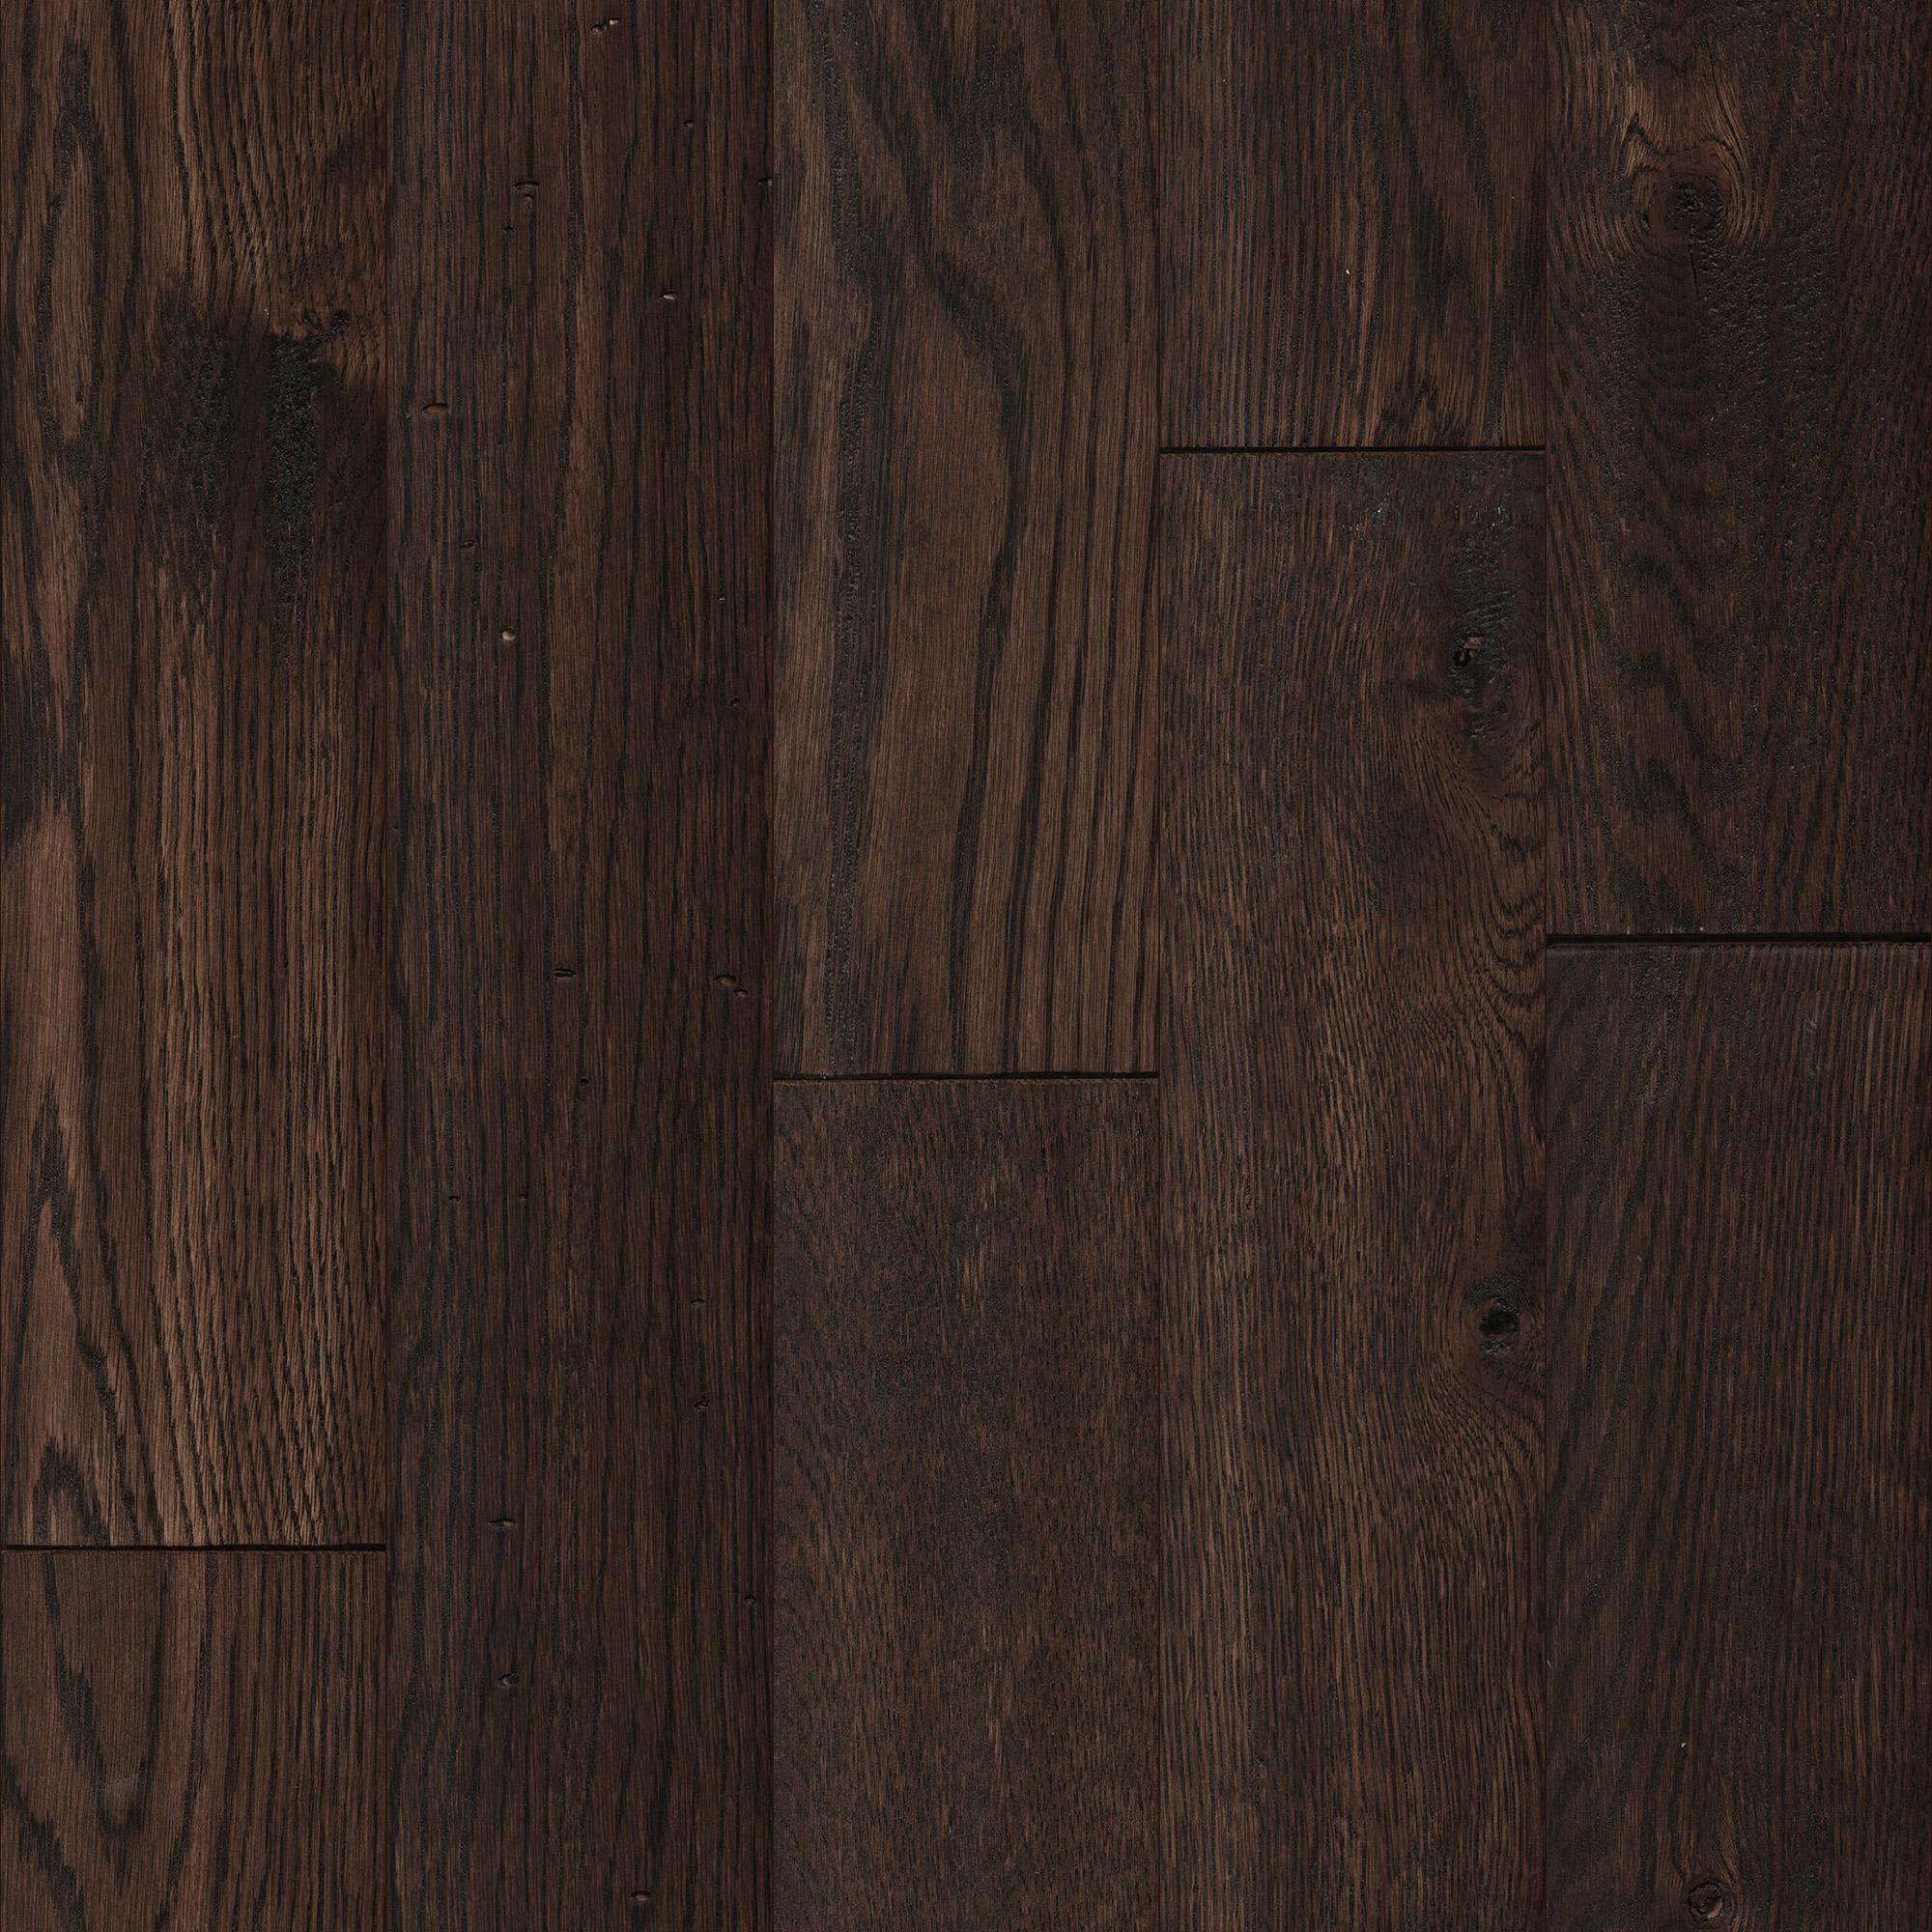 16 Famous 3 Inch Maple Hardwood Flooring 2024 free download 3 inch maple hardwood flooring of mullican chatelaine oak ebony 4 wide solid hardwood flooring with regard to more views